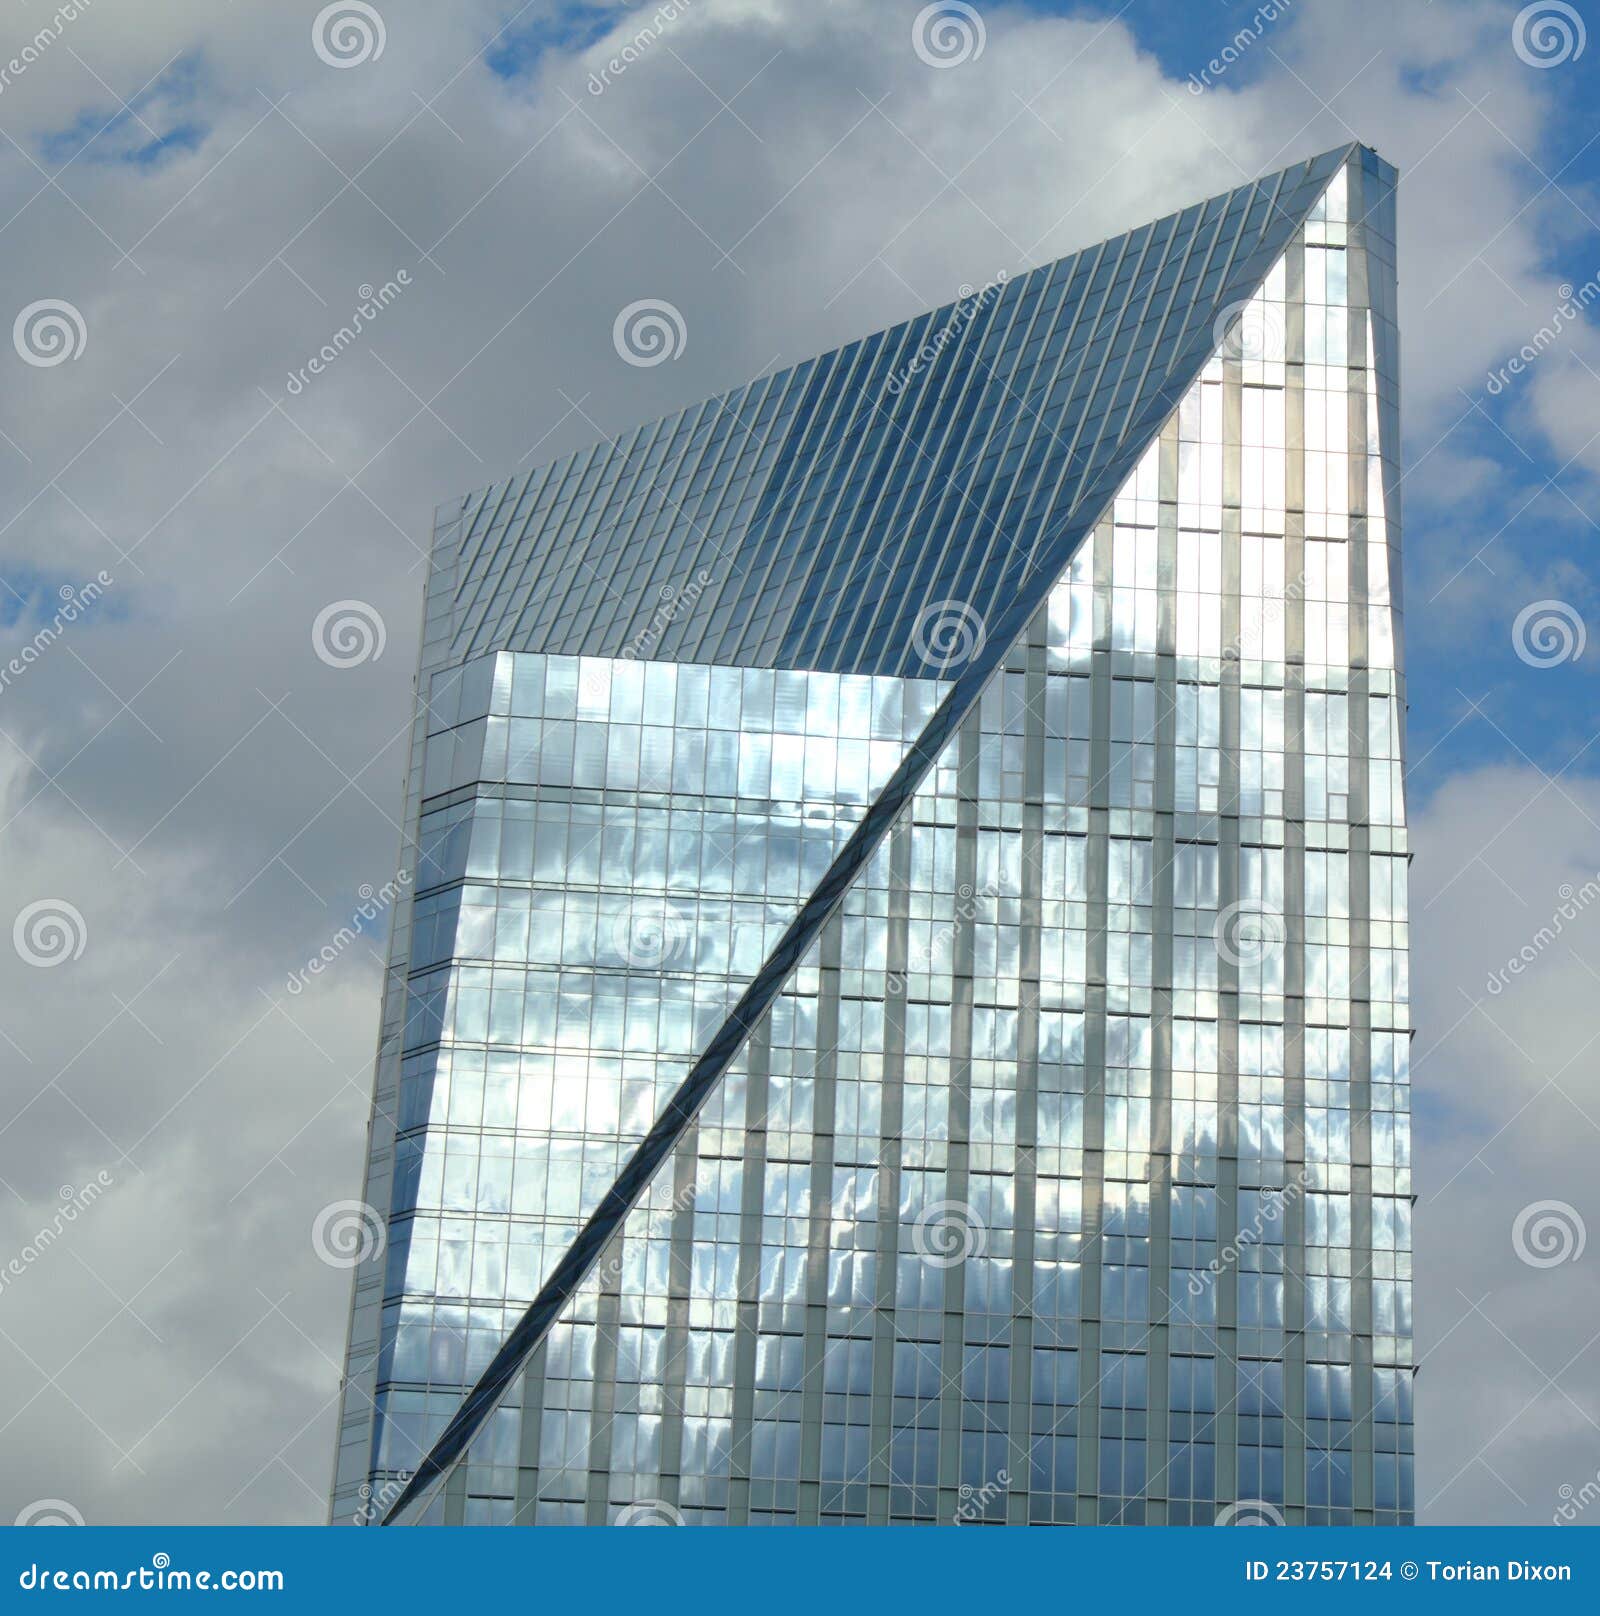 geometric skyscrapper